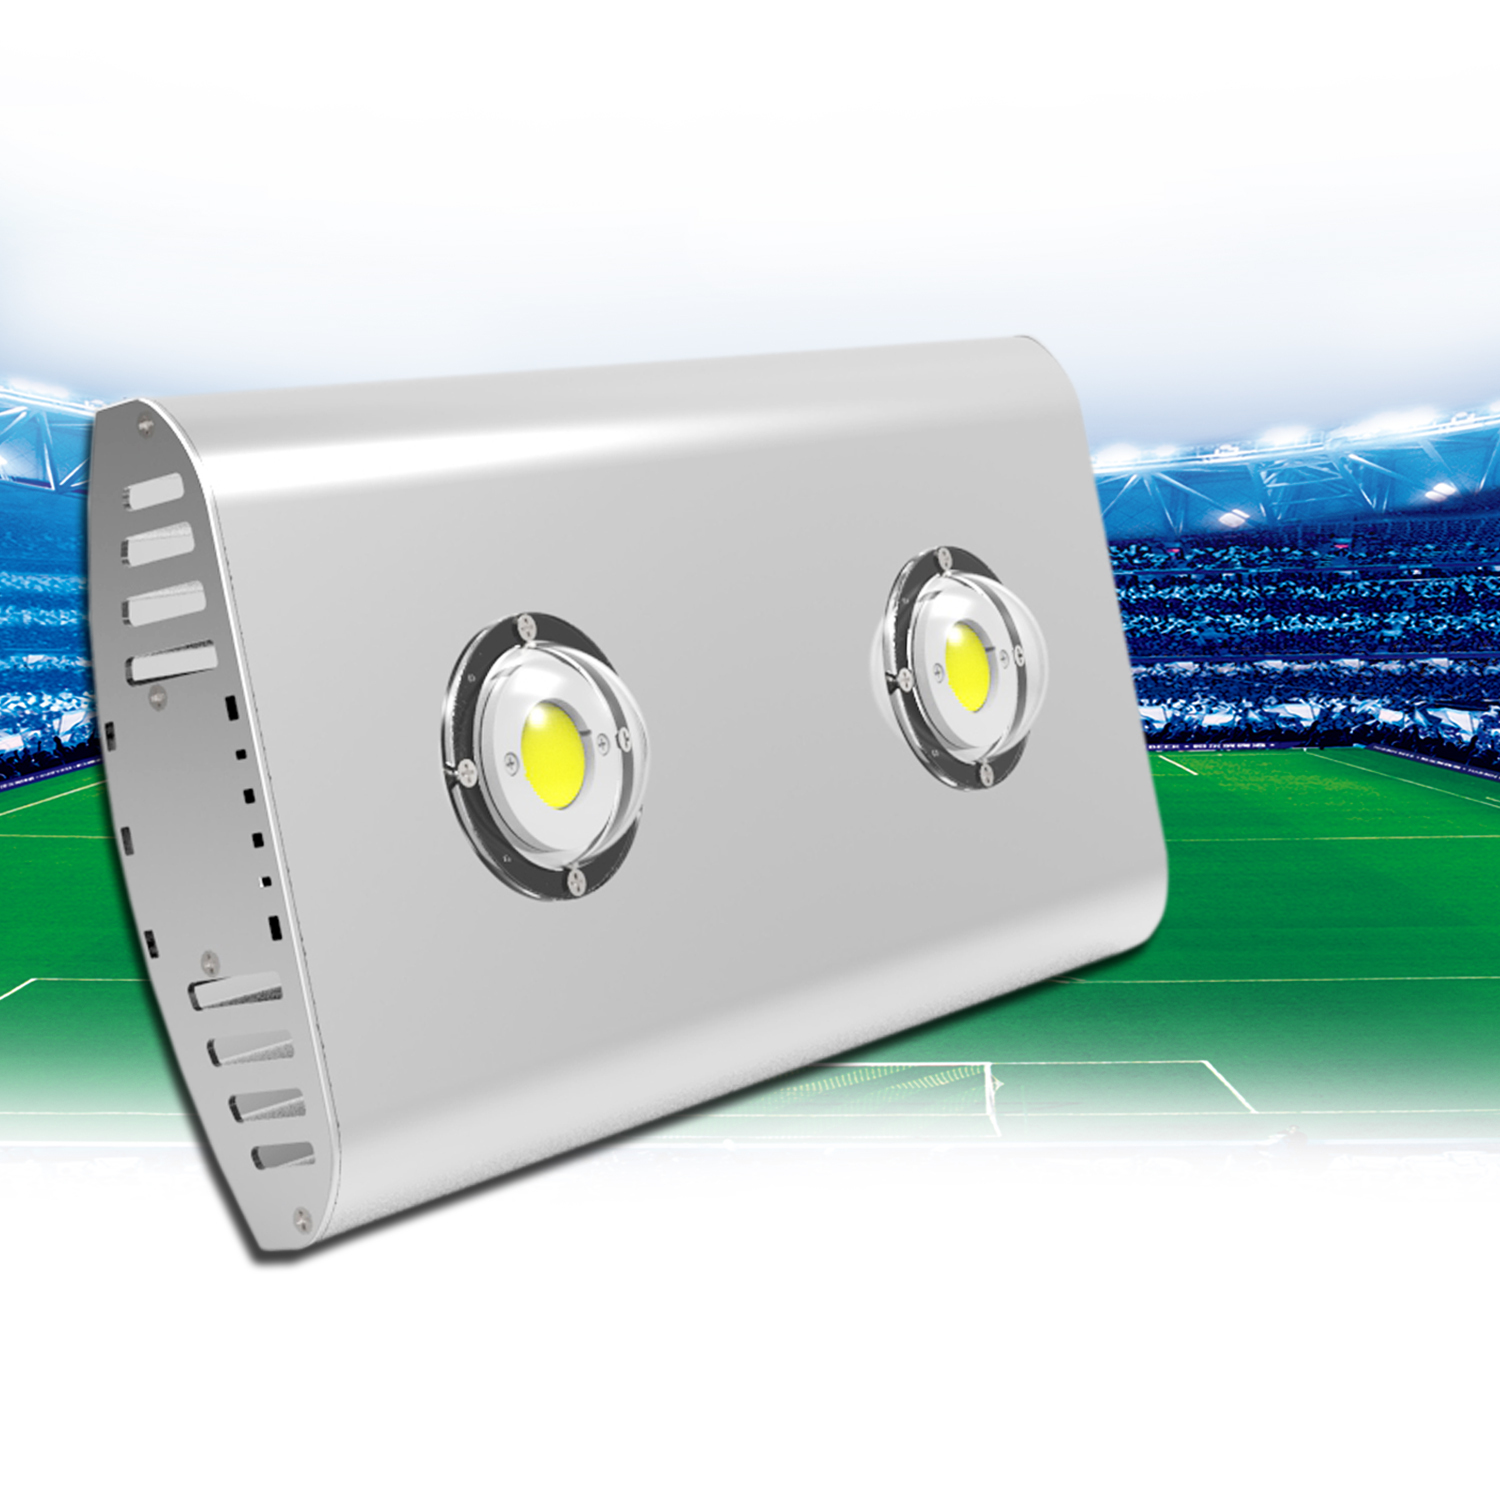 Aigostar - Confezione da 5 Faretto a LED COB, 80W, 7200LM, Impermeabile IP65, Luce Naturale 4000K[Classe di efficienza energetica A+]